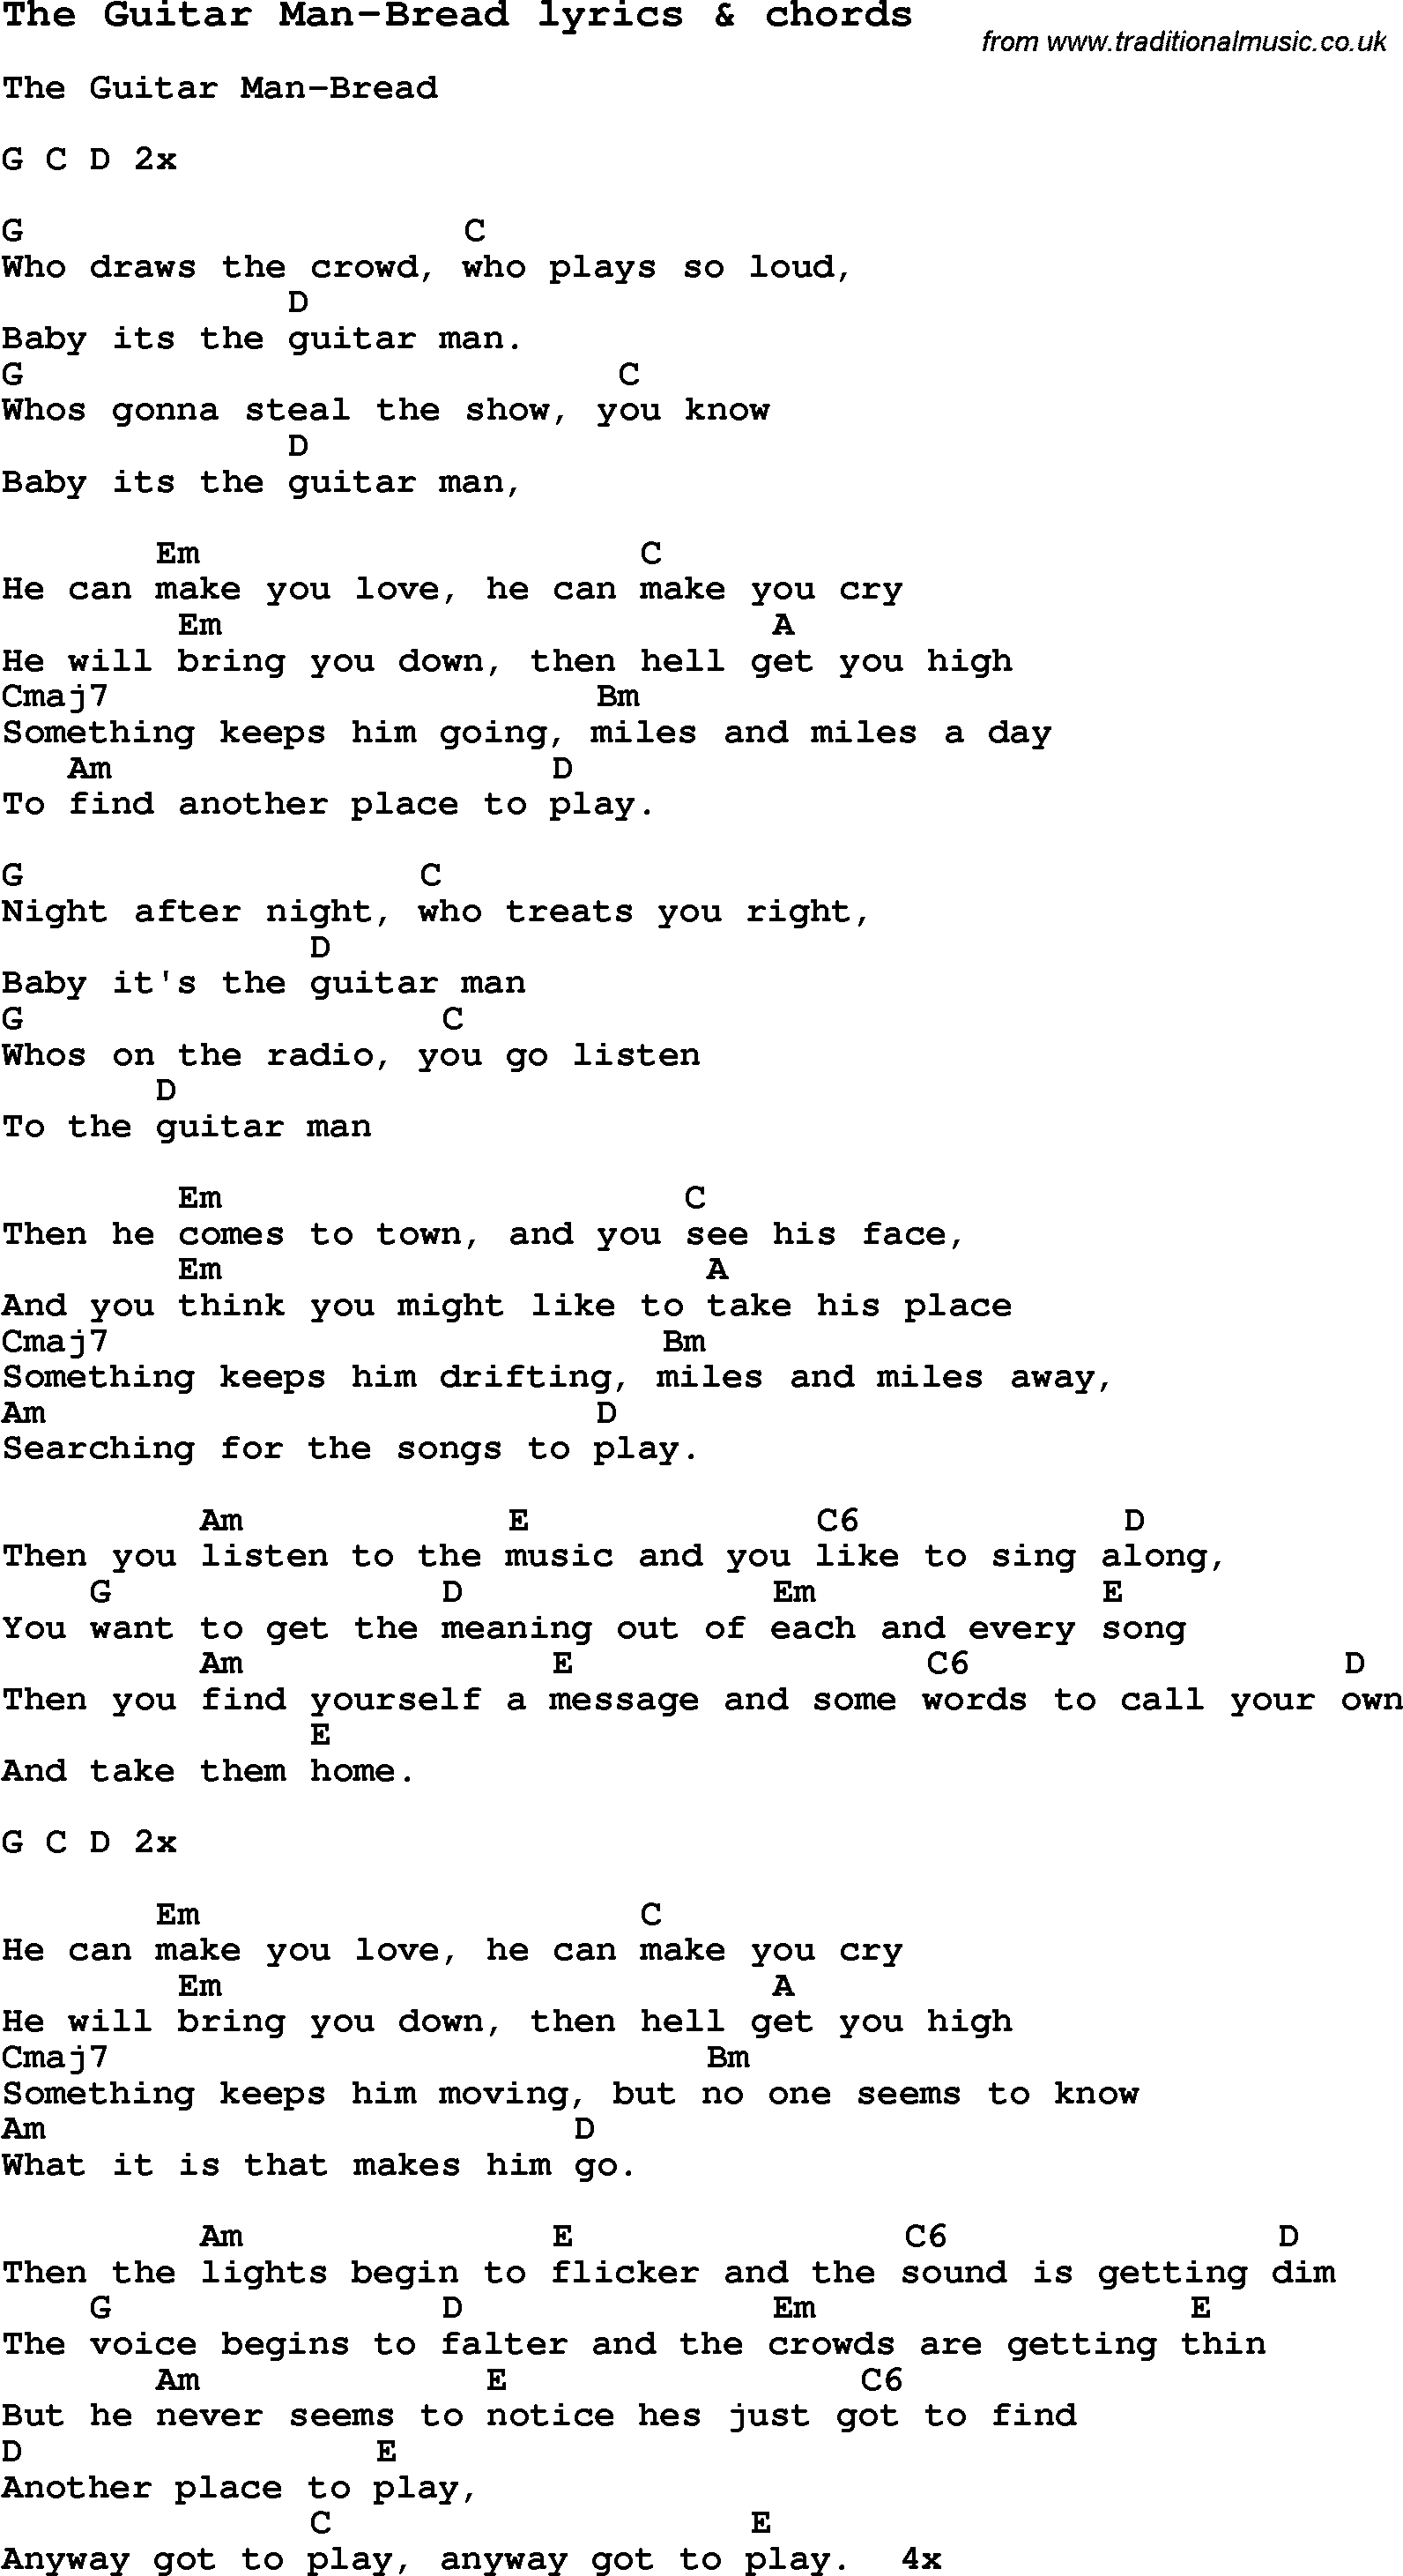 Love Song Lyrics for: The Guitar Man-Bread with chords for Ukulele, Guitar Banjo etc.